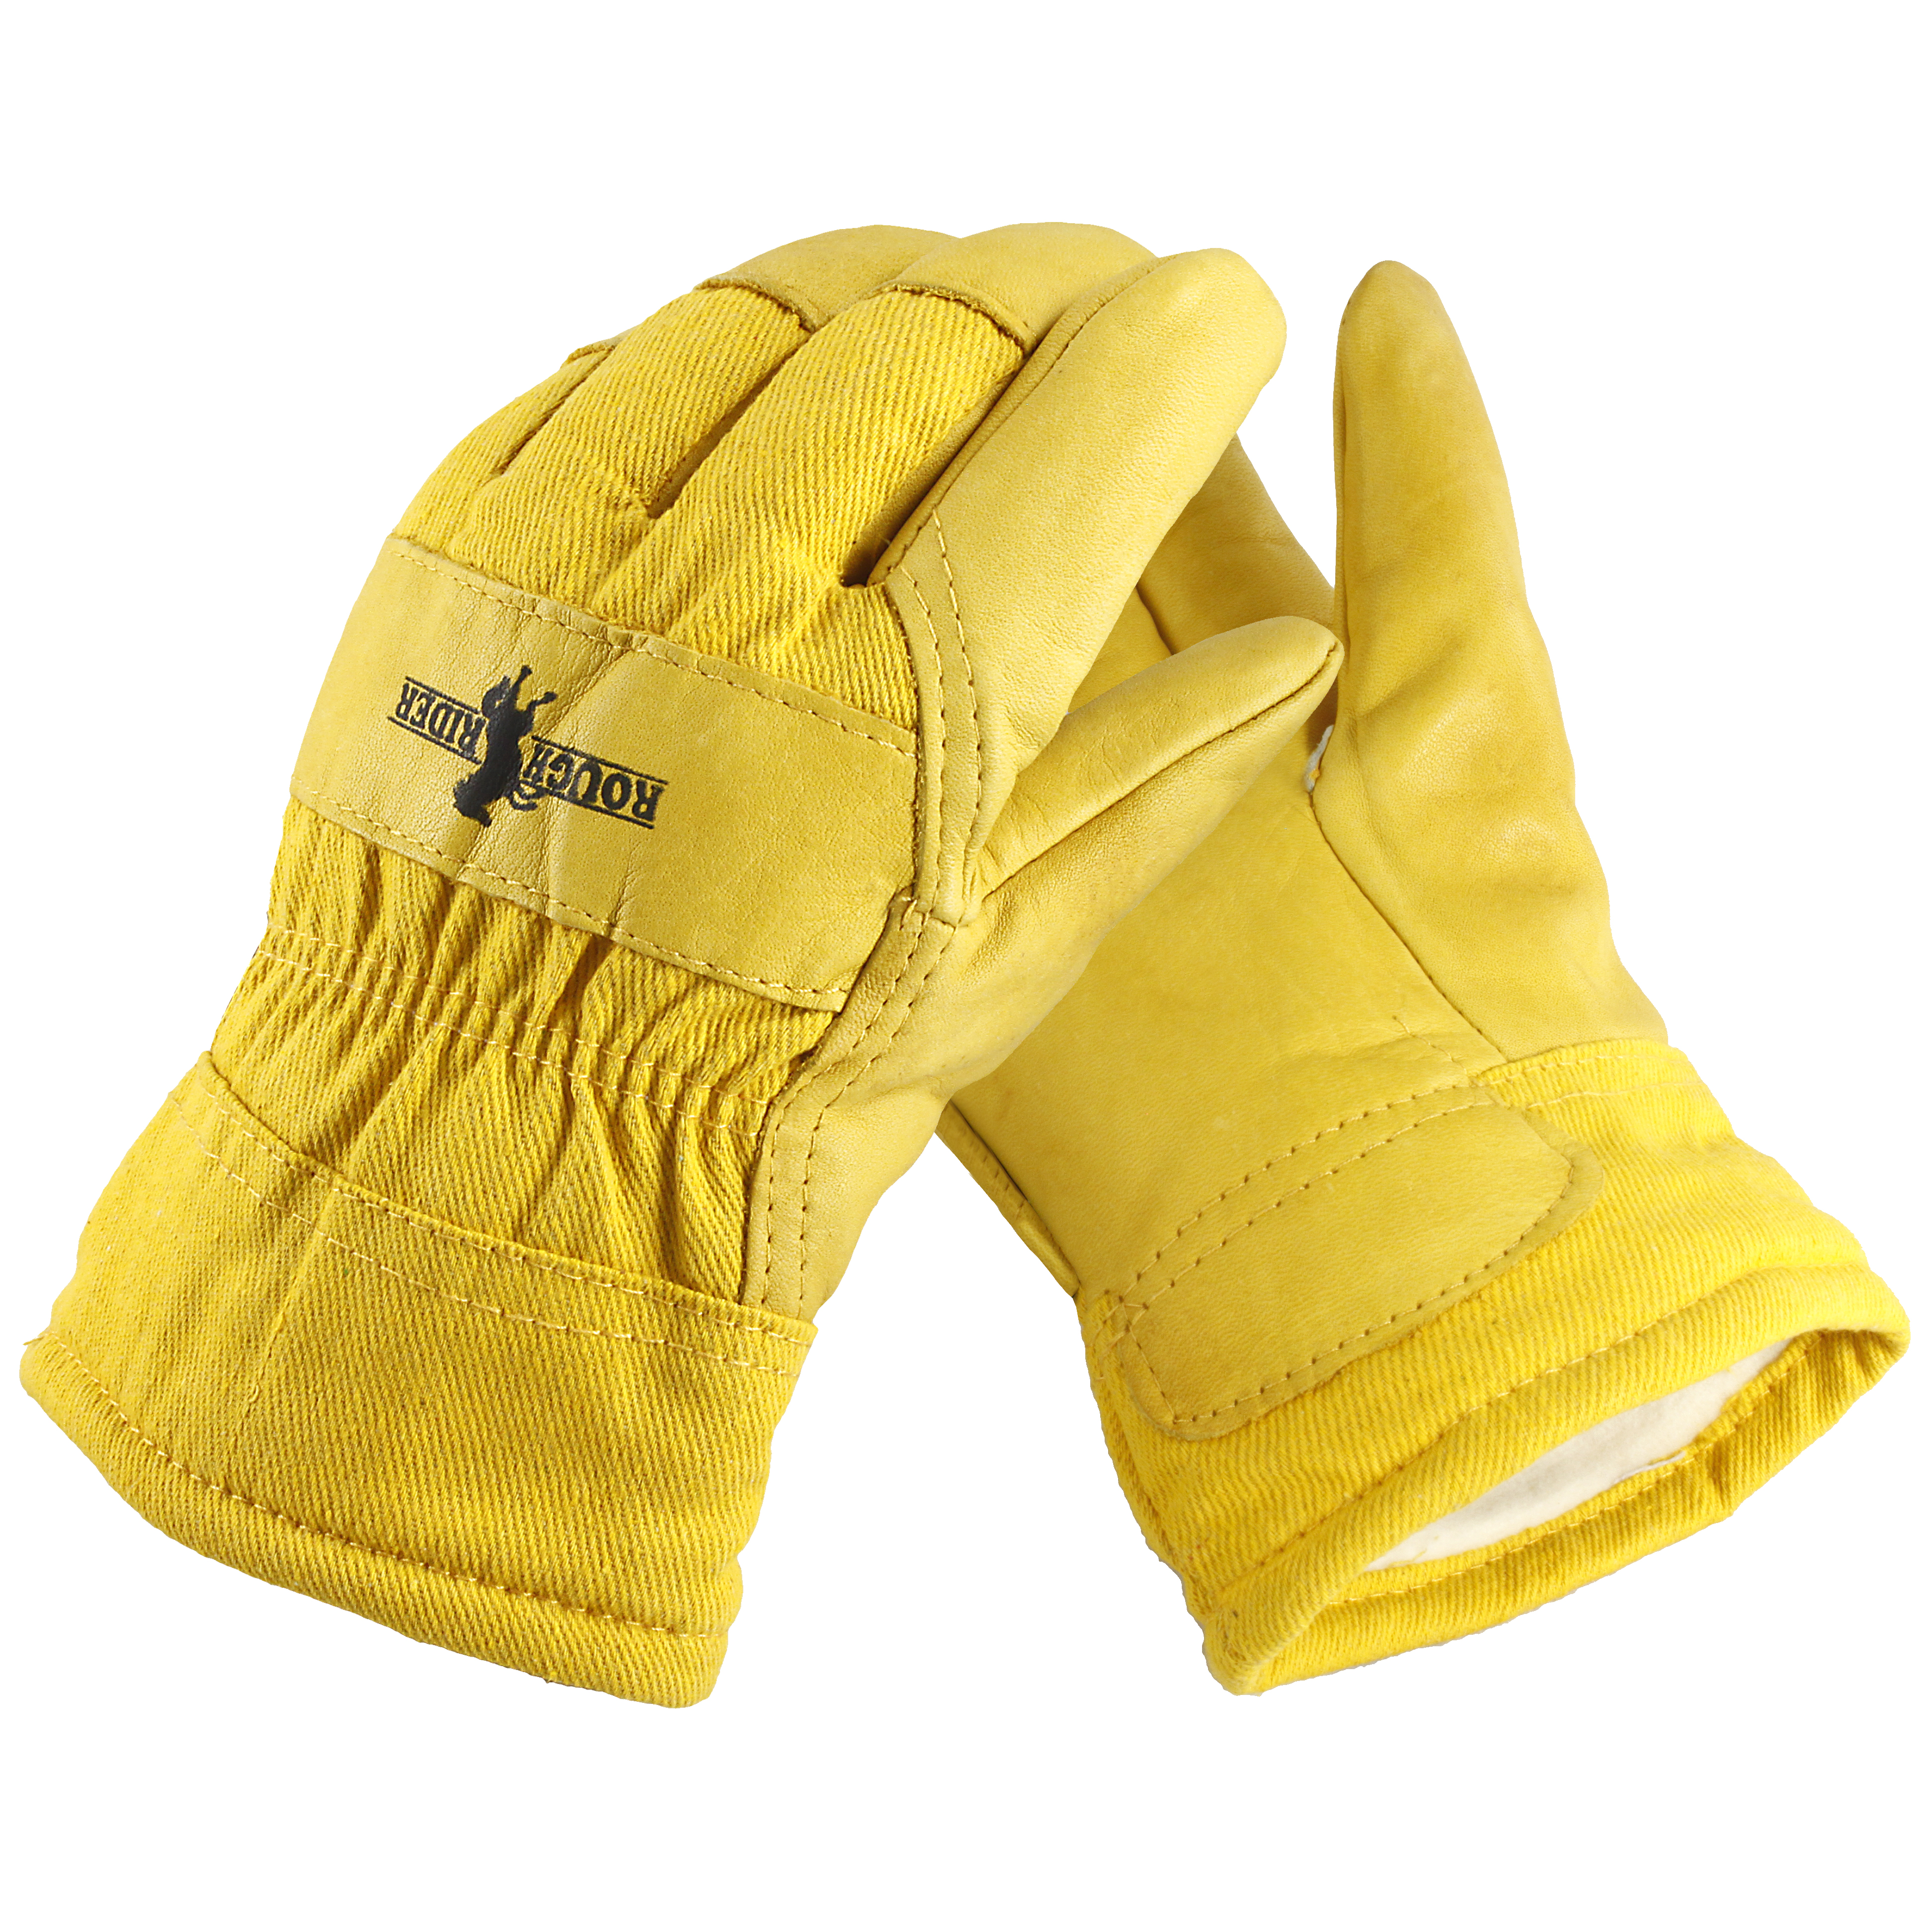 Rough Rider&reg; Insulated Grain Leather Palm Gloves, Comfort Cuff